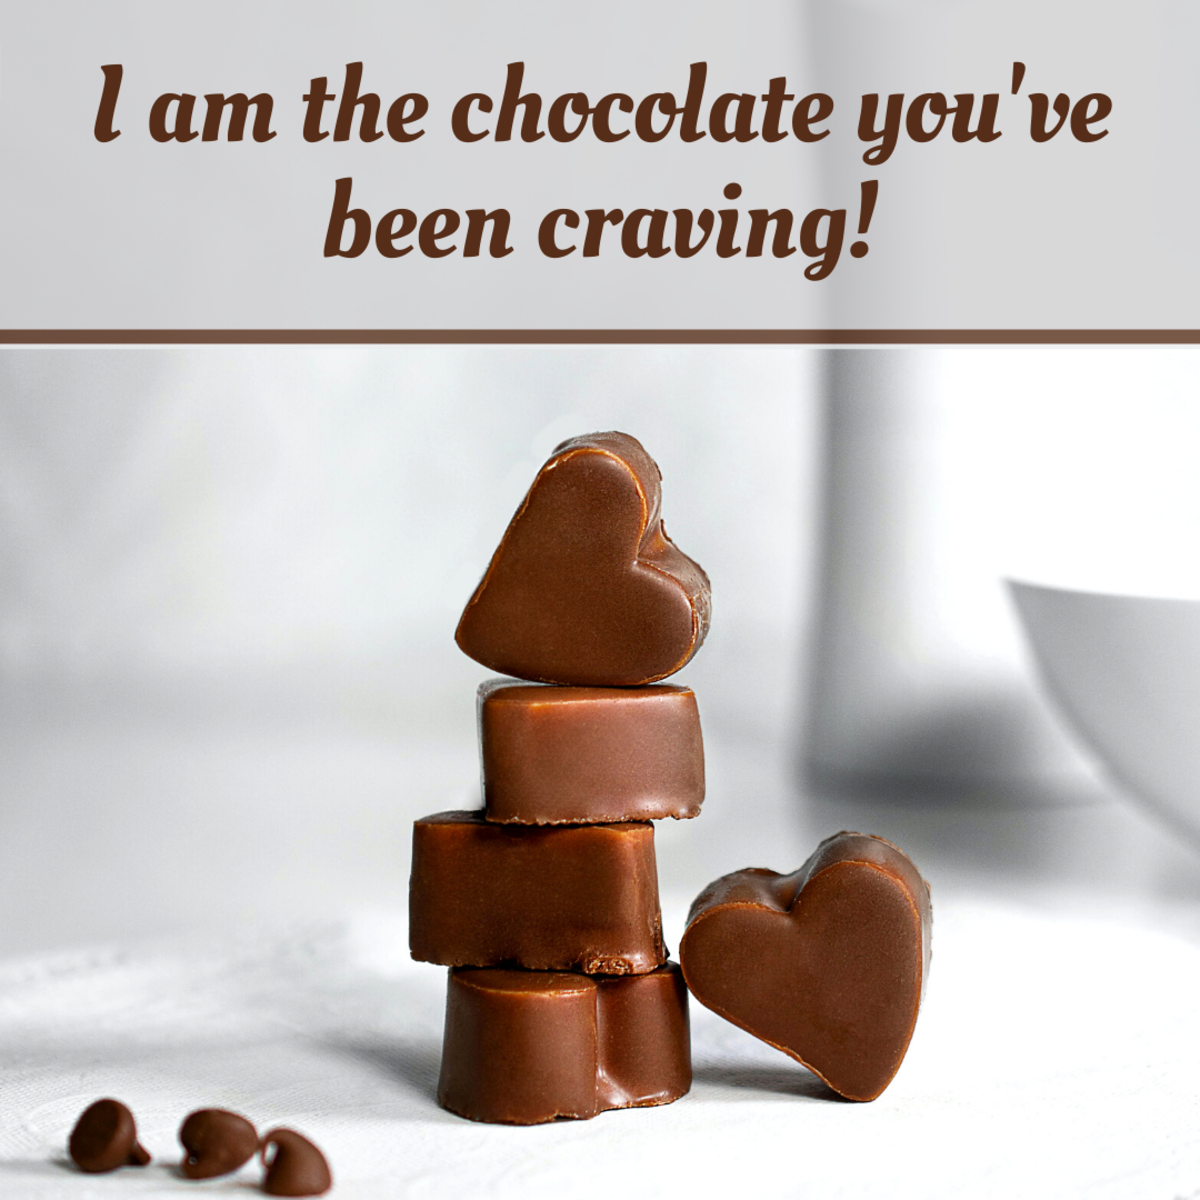 Everyone loves chocolate!